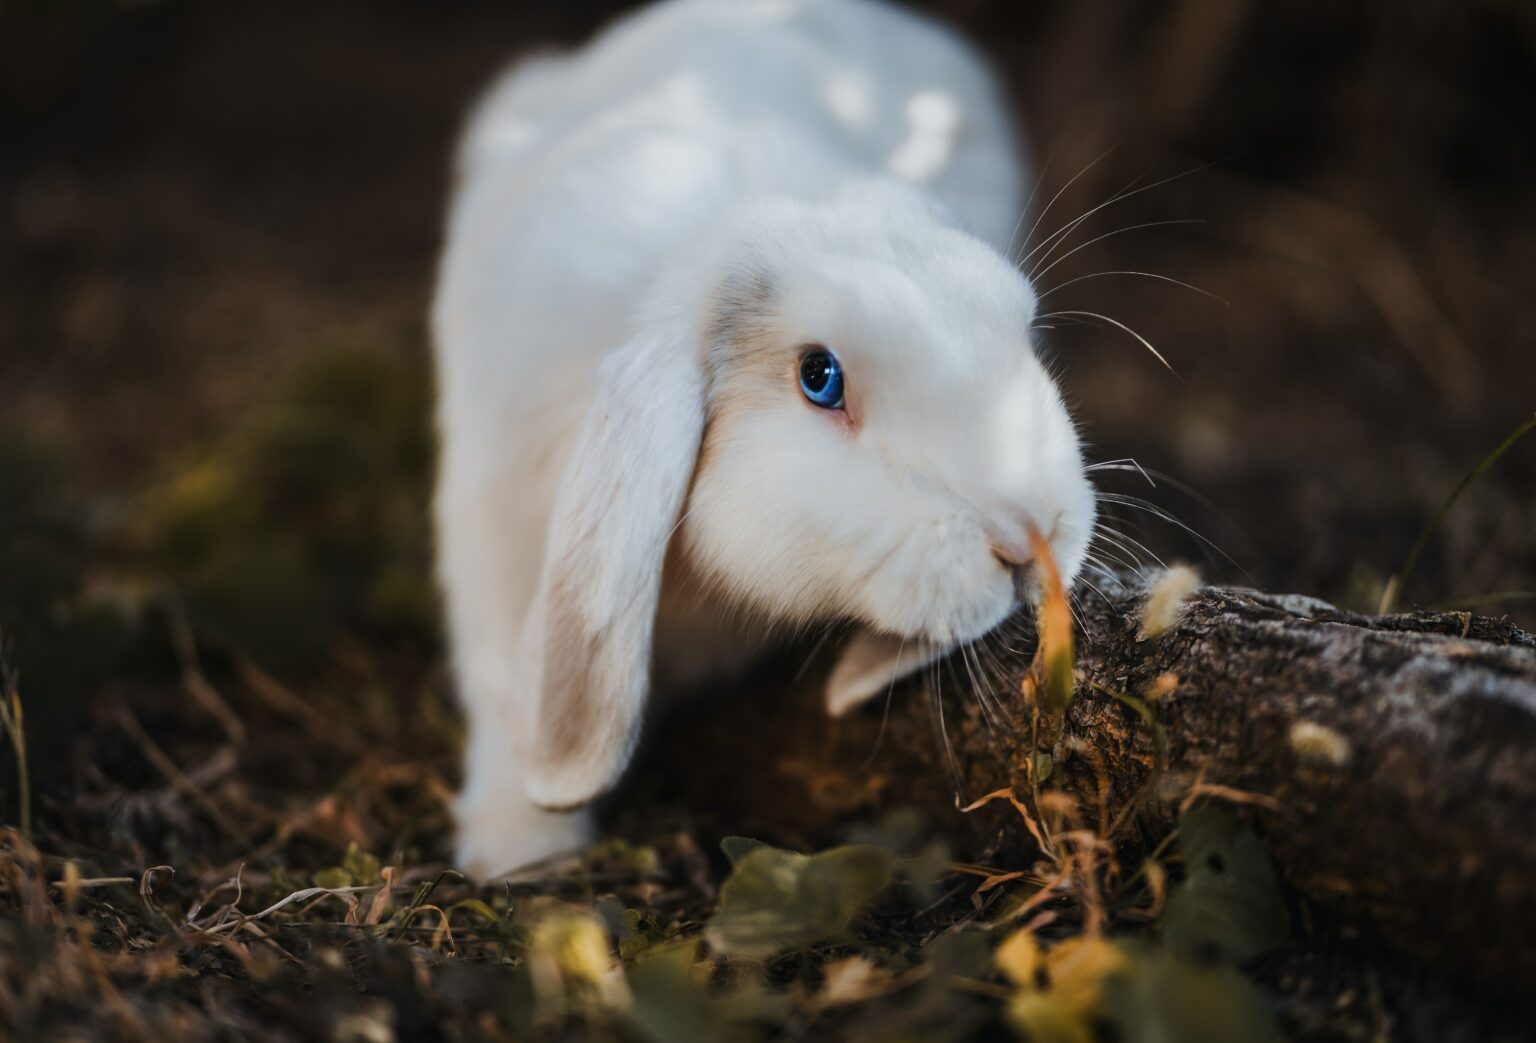 Pet Rabbit story for kids by kids with Sara Bookosmia